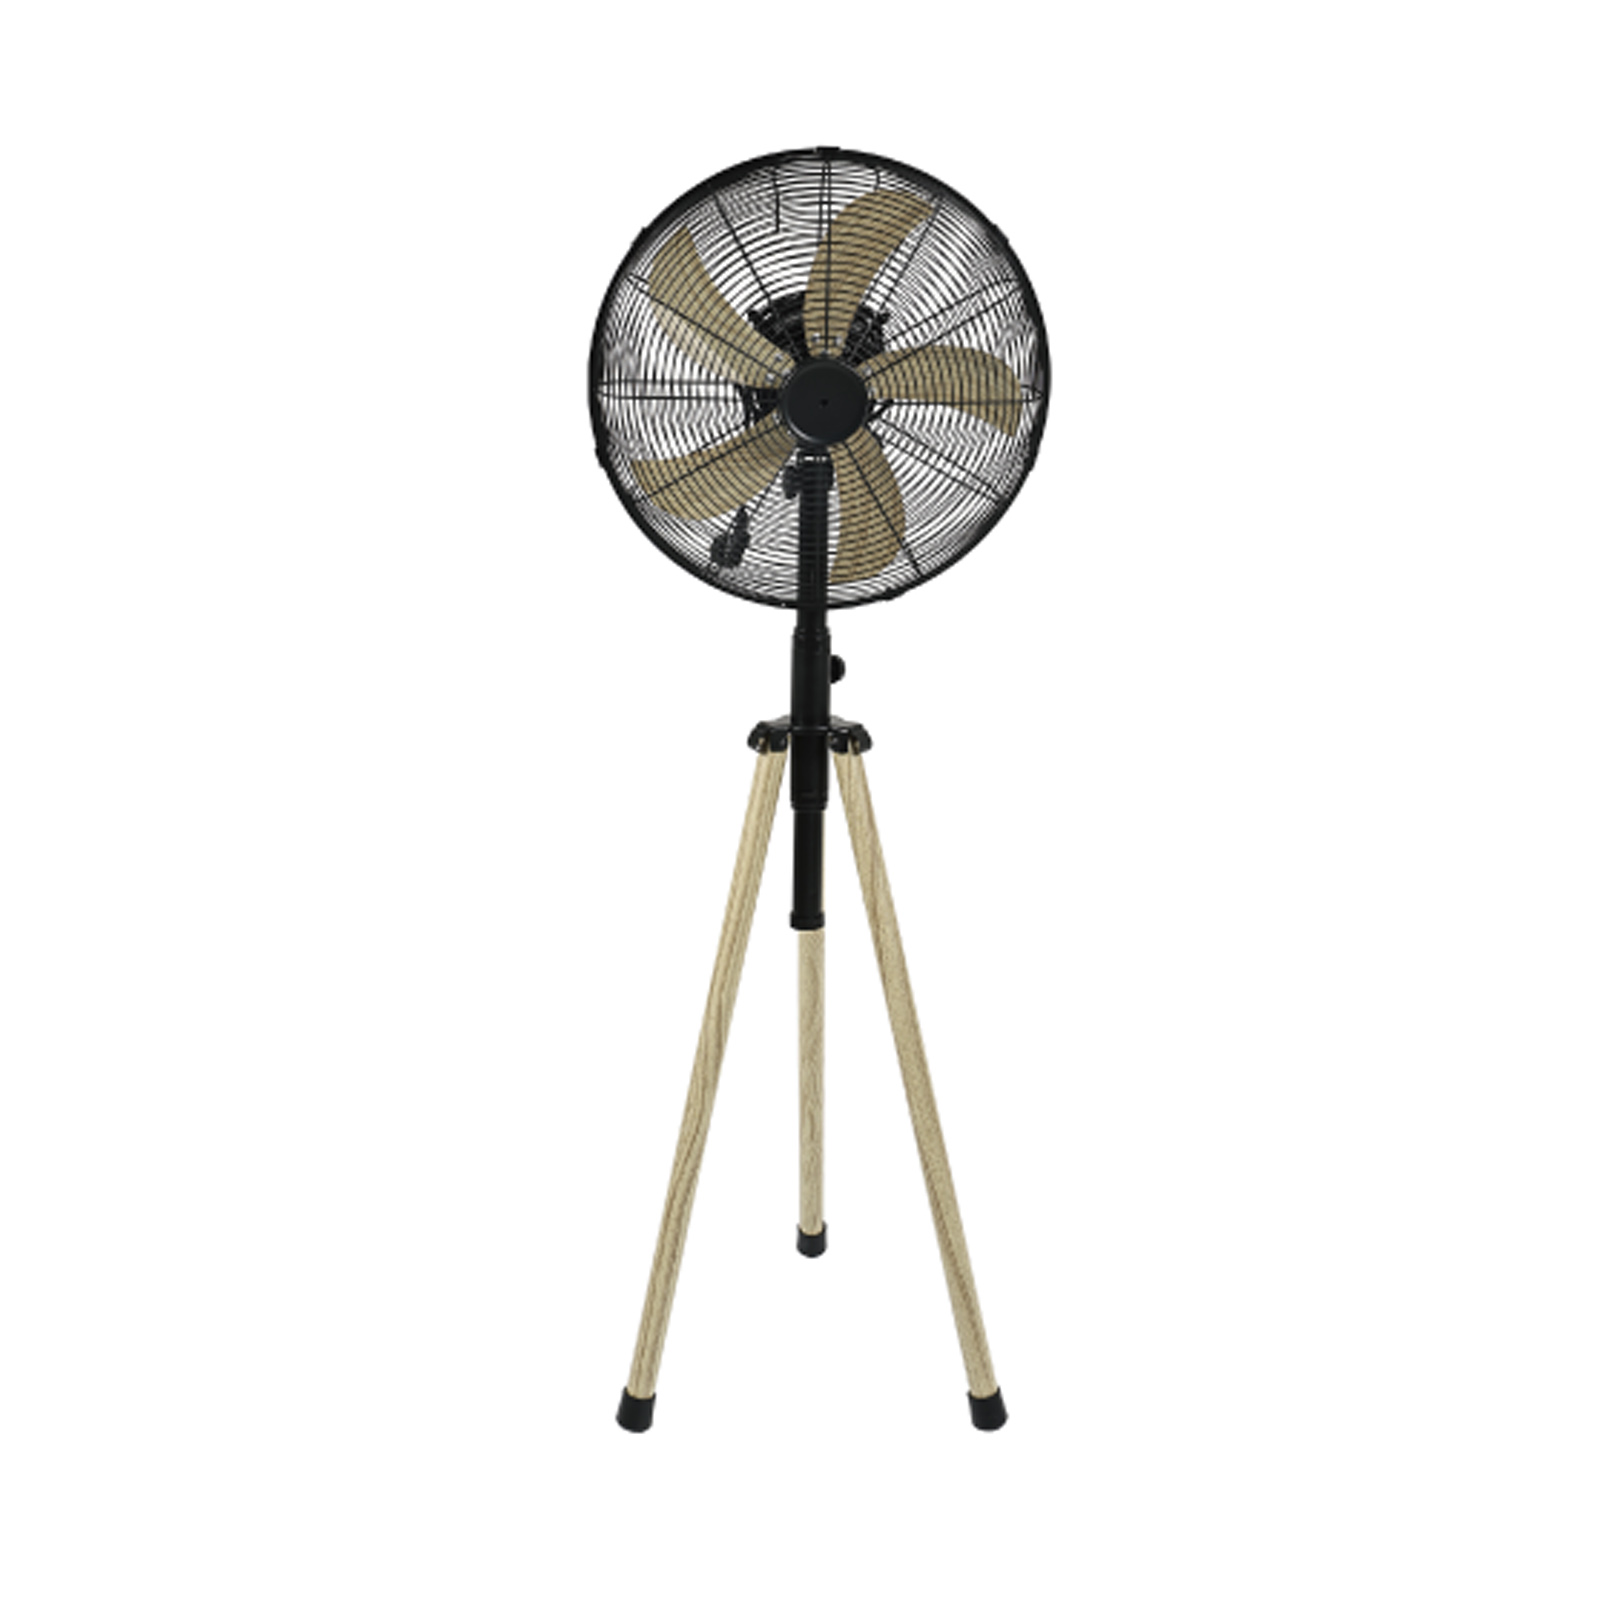 FS-A03-16 HOWSTODAY 16-inch Wood Grain Three-legged Floor Fan